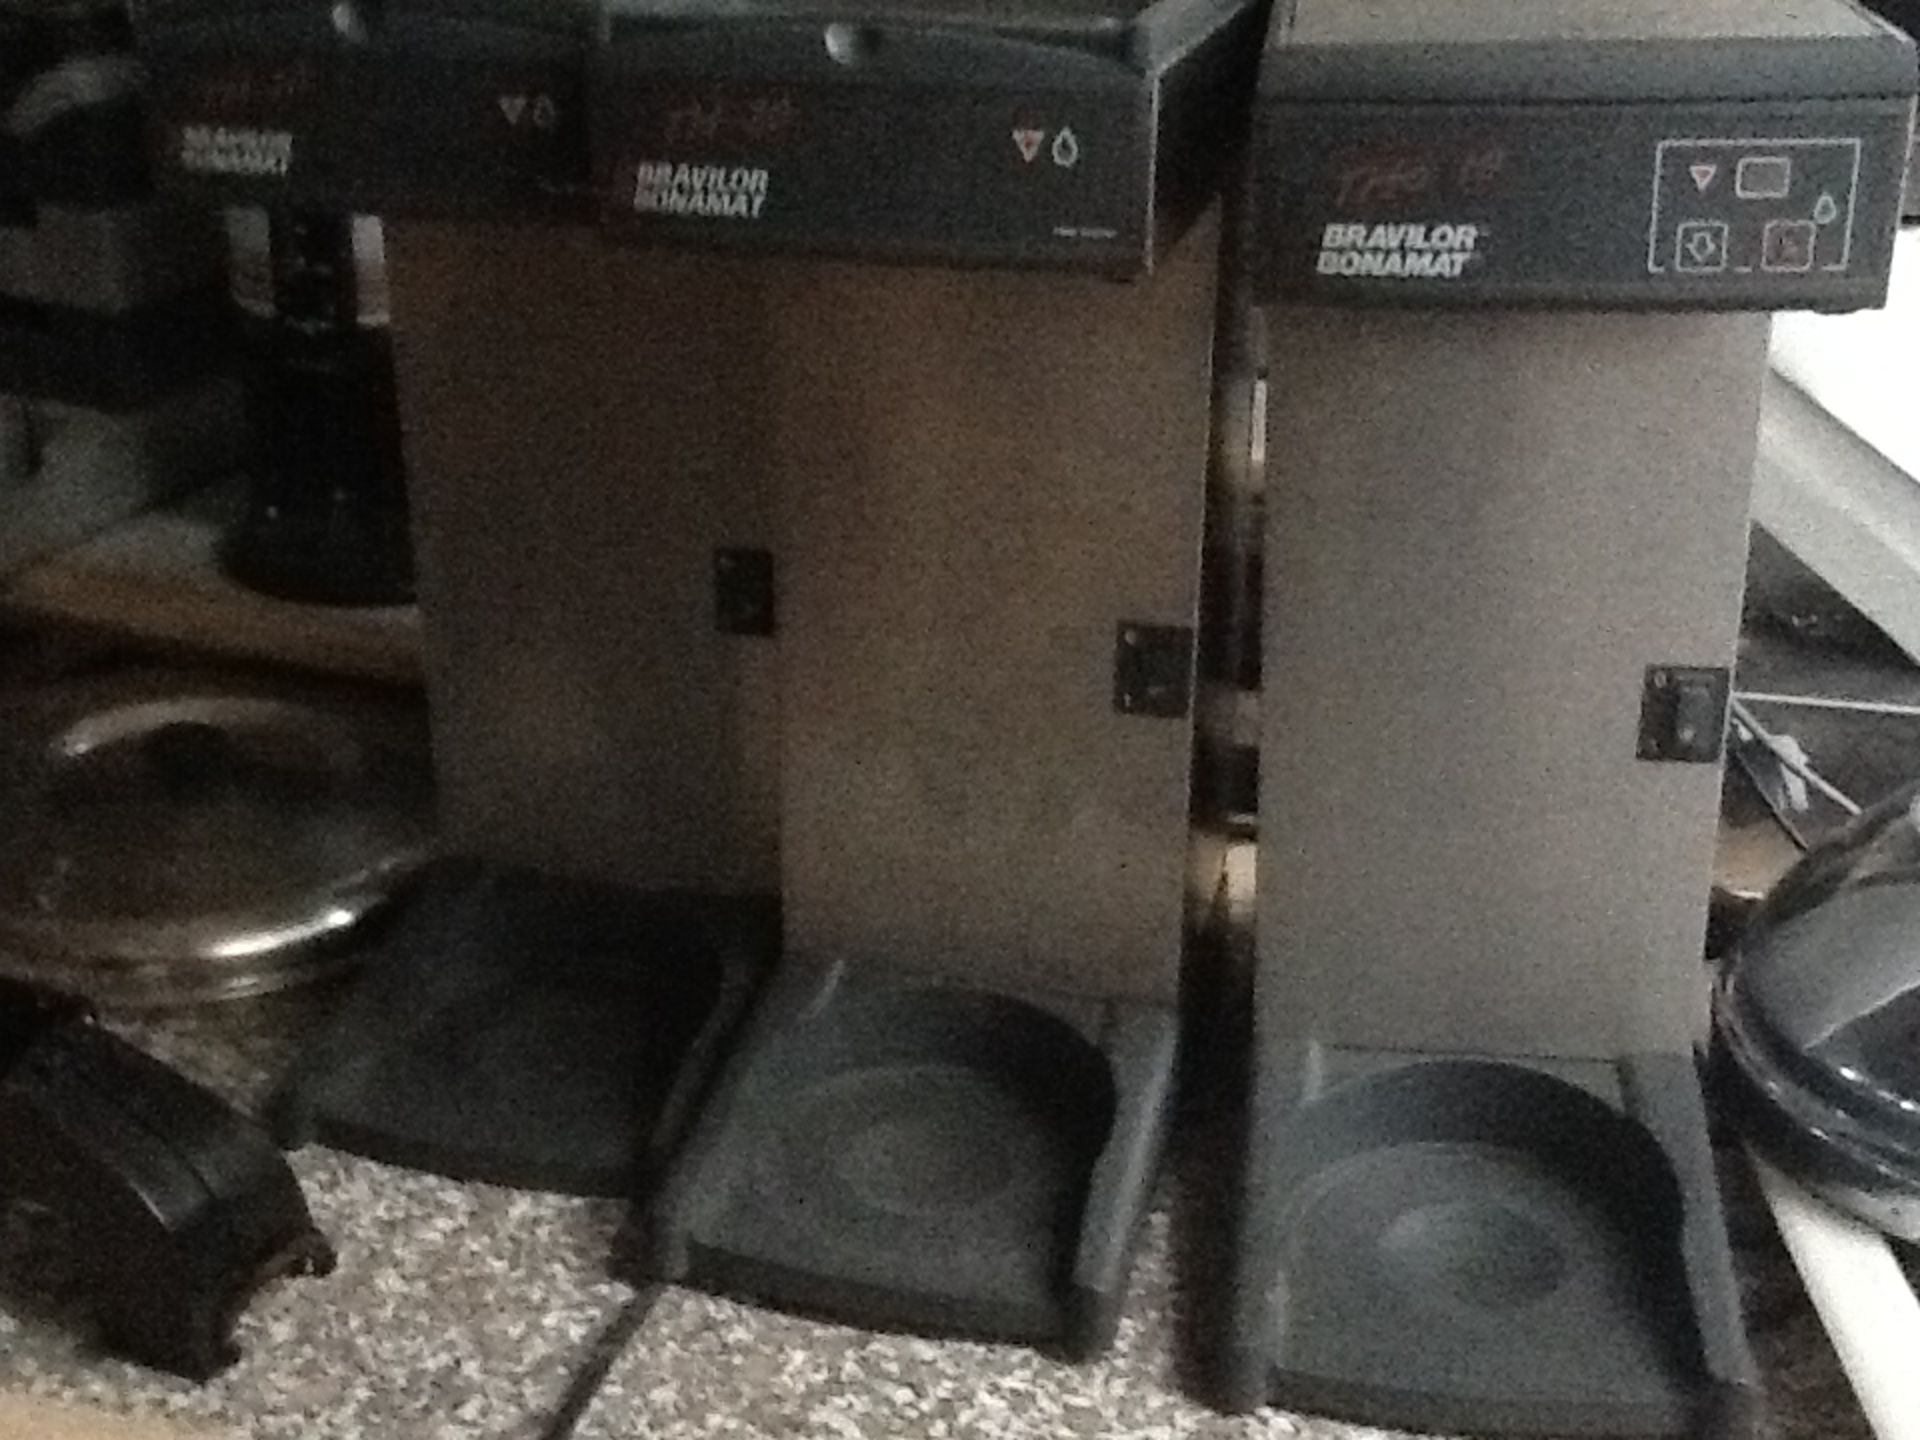 Three Bravilor Bonamat Filter Coffee Machines - Auto Fill